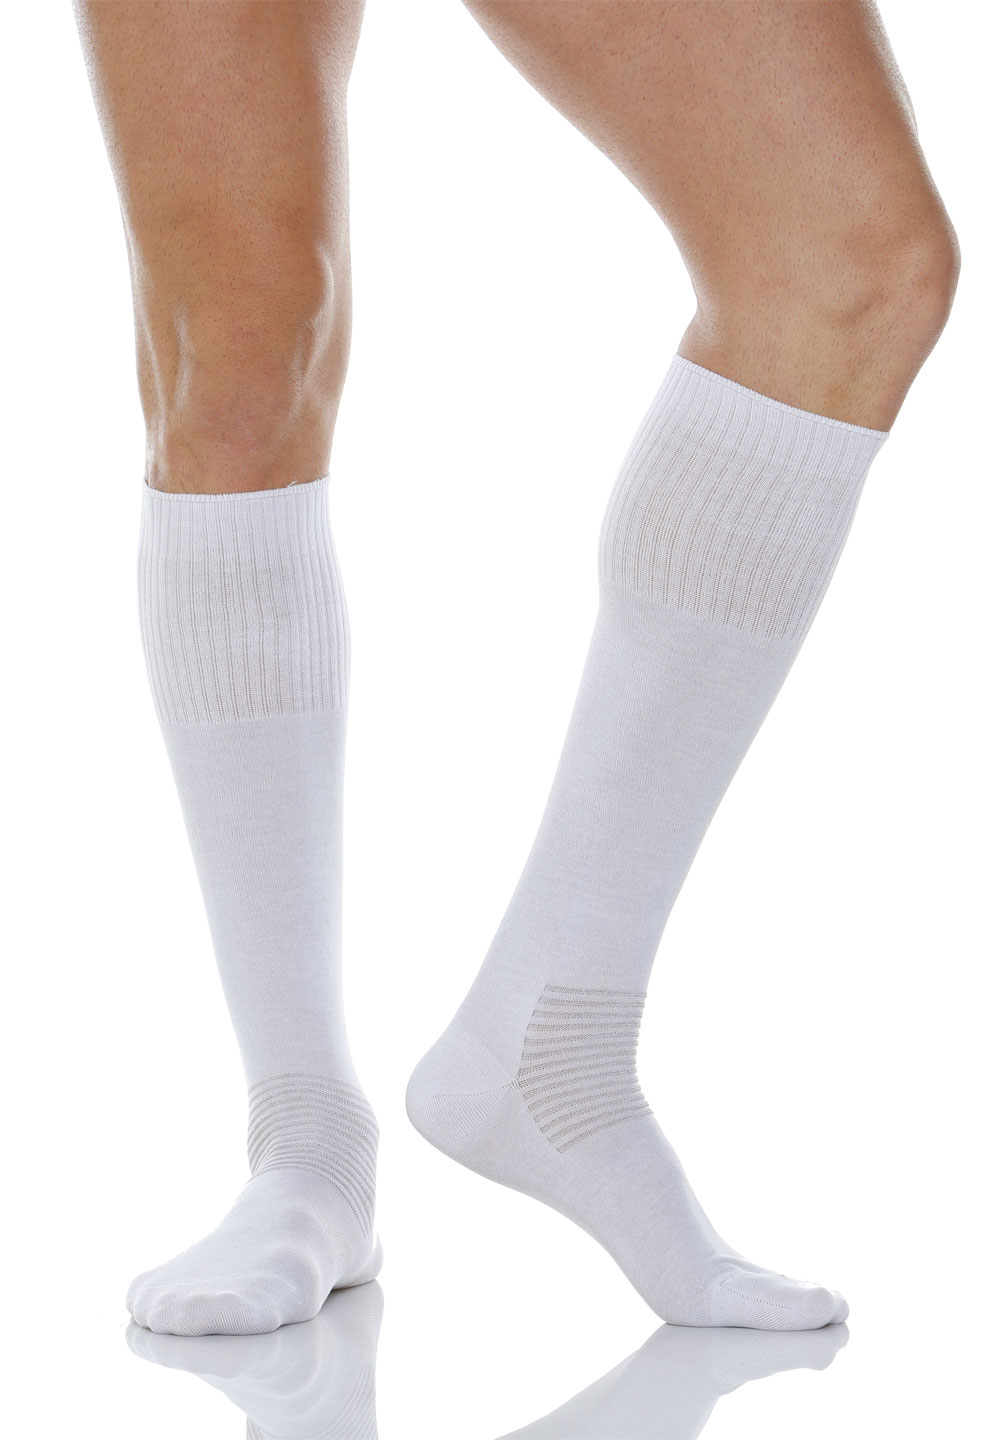 Buy Relaxsan 550L Diabetic Store knee - to your Aviano socks body shape